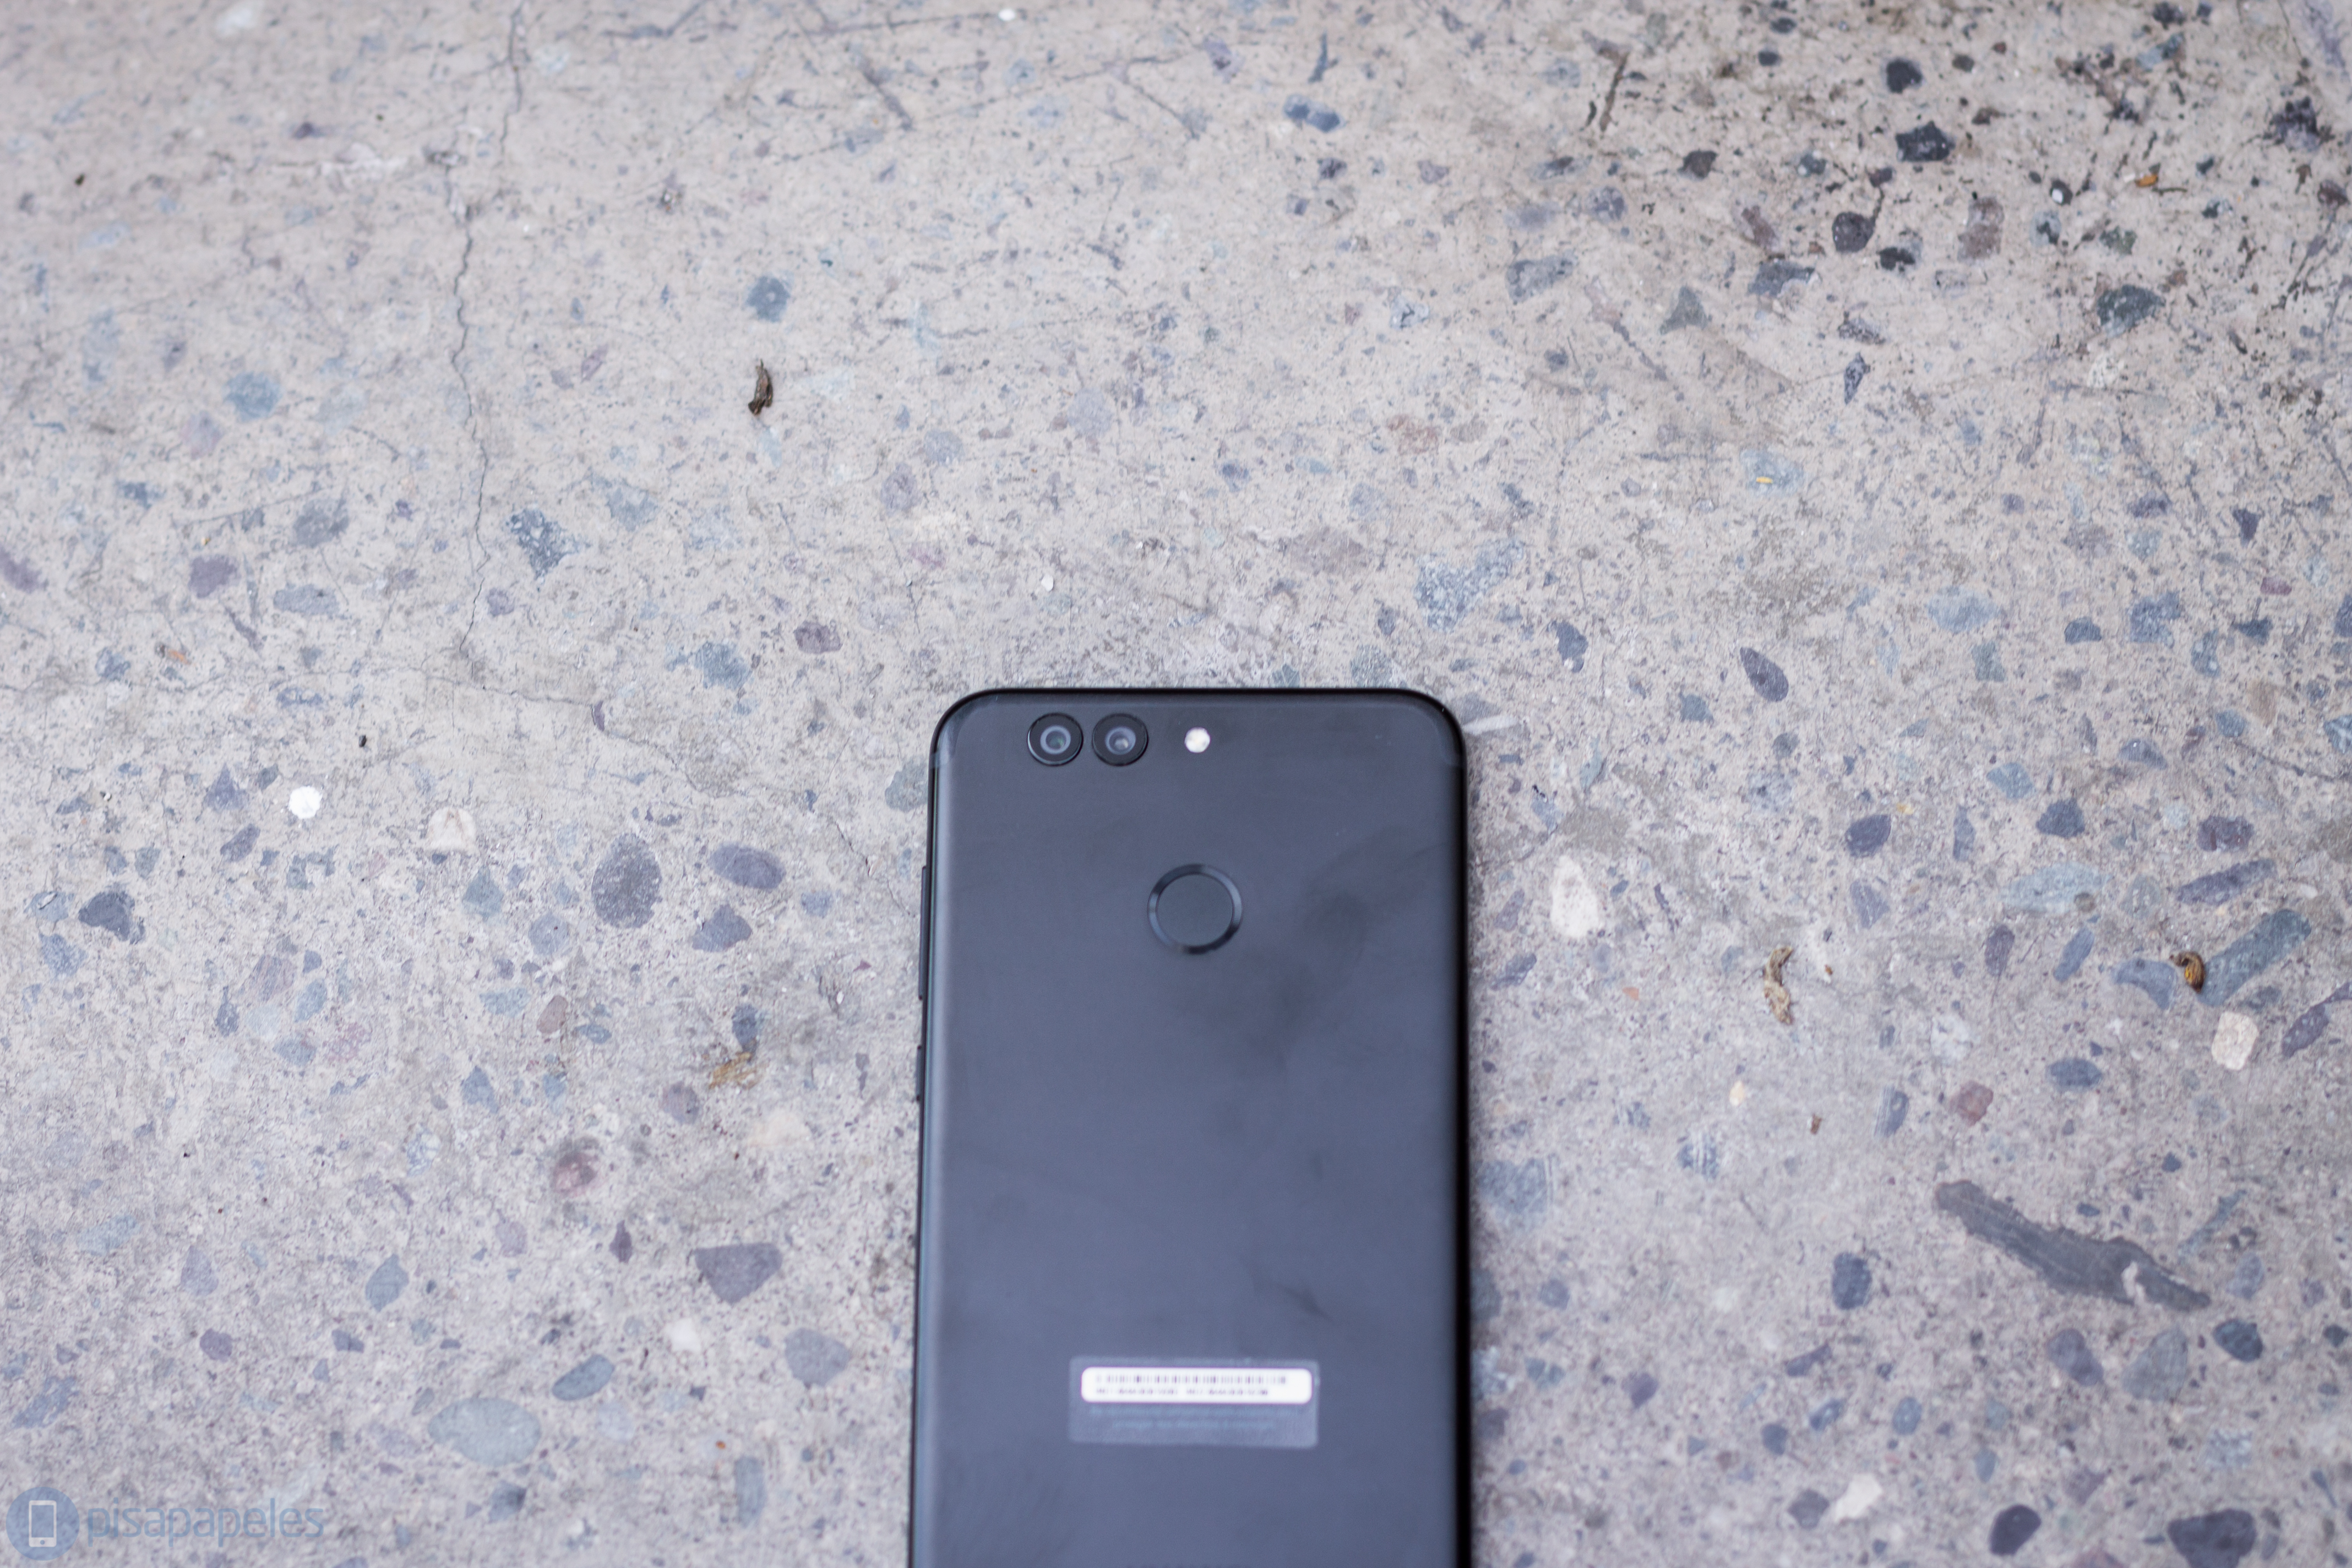 Huawei P10 Selfie Review 3 "width =" 4272 "height =" 2848